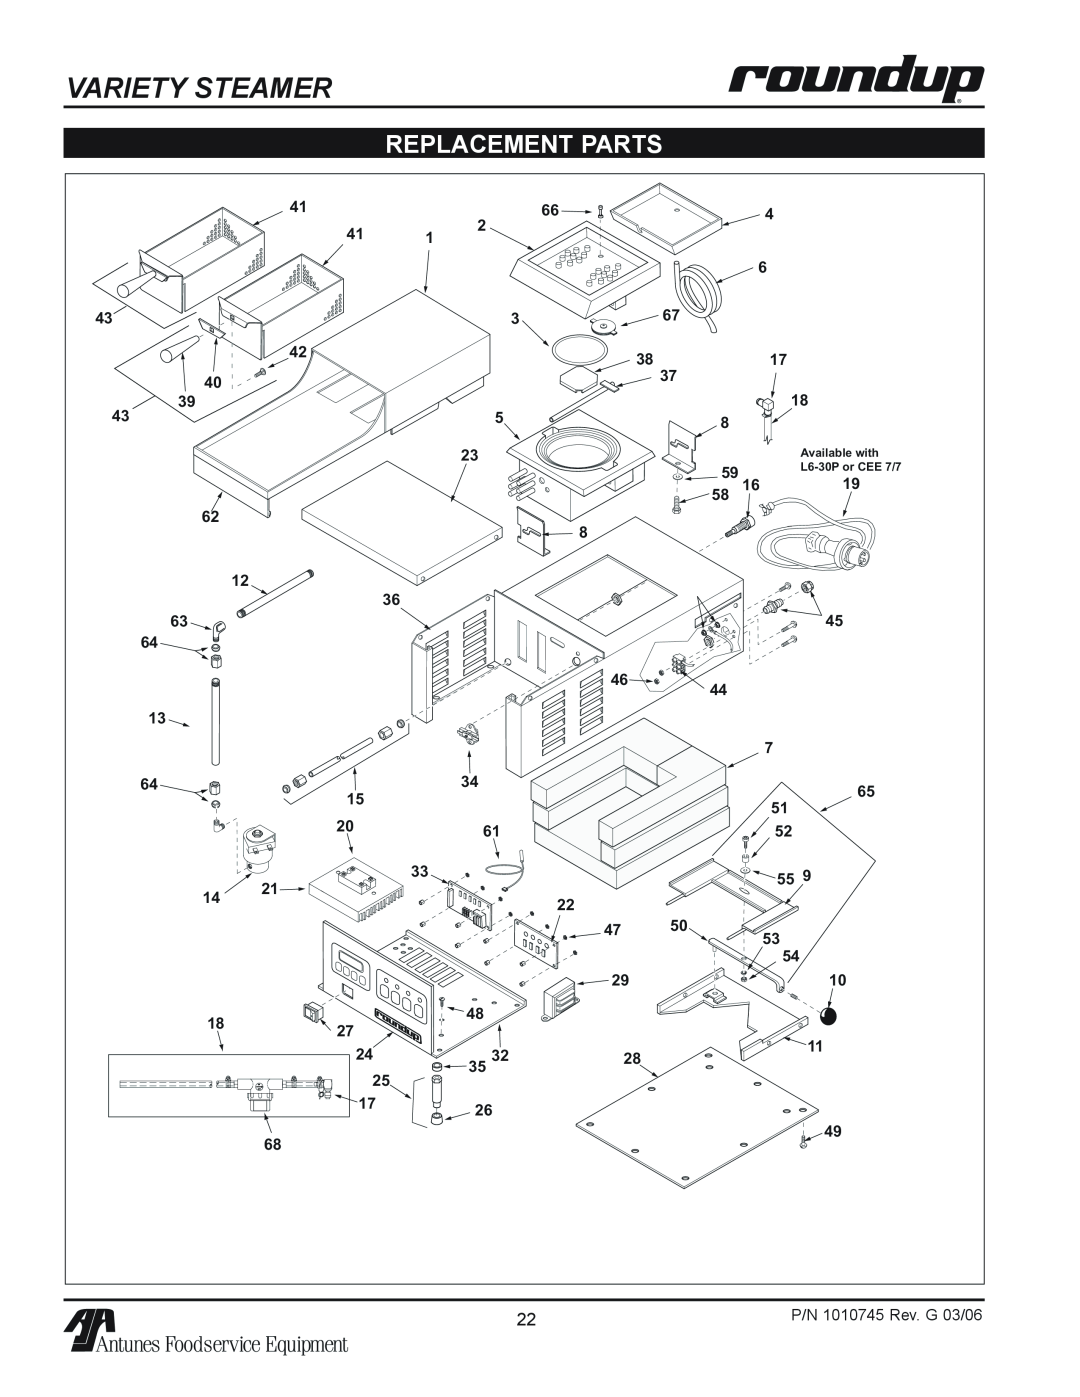 Antunes, AJ VS-350 owner manual Replacement Parts, Variety STeamer, P/N 1010745 Rev. G 03/06 